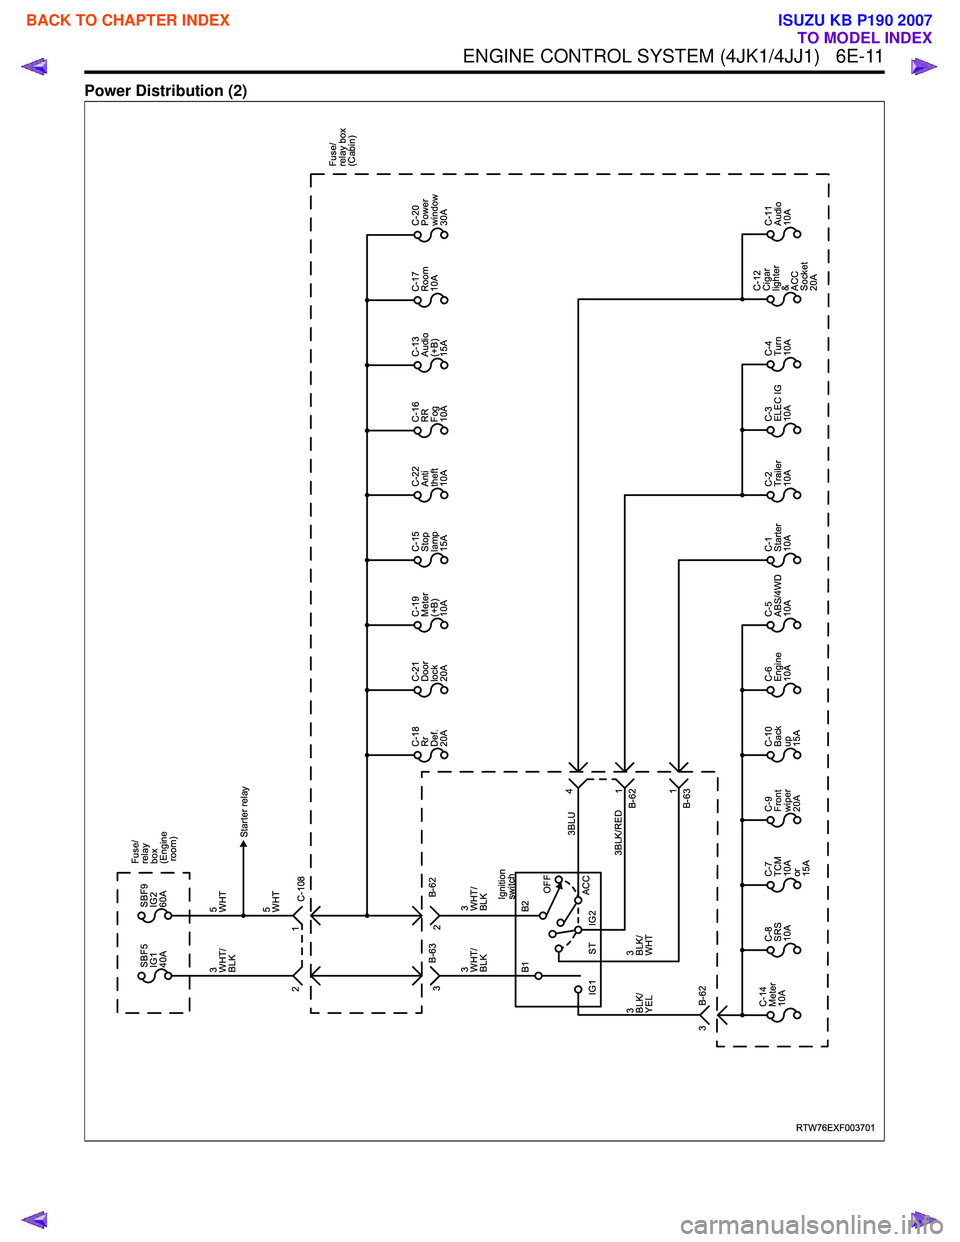 ISUZU KB P190 2007  Workshop User Guide ENGINE CONTROL SYSTEM (4JK1/4JJ1)   6E-11
Power Distribution (2)
RTW76EXF003701
C-108
5 
WHT
3
WHT/
BLK
5
WHT
3
WHT/
BLK
3BLU
3BLK/RED
3
WHT/
BLK
3
BLK/
YEL 3
BLK/
WHT B-62
B-63
2
4
B-62 
B-63 